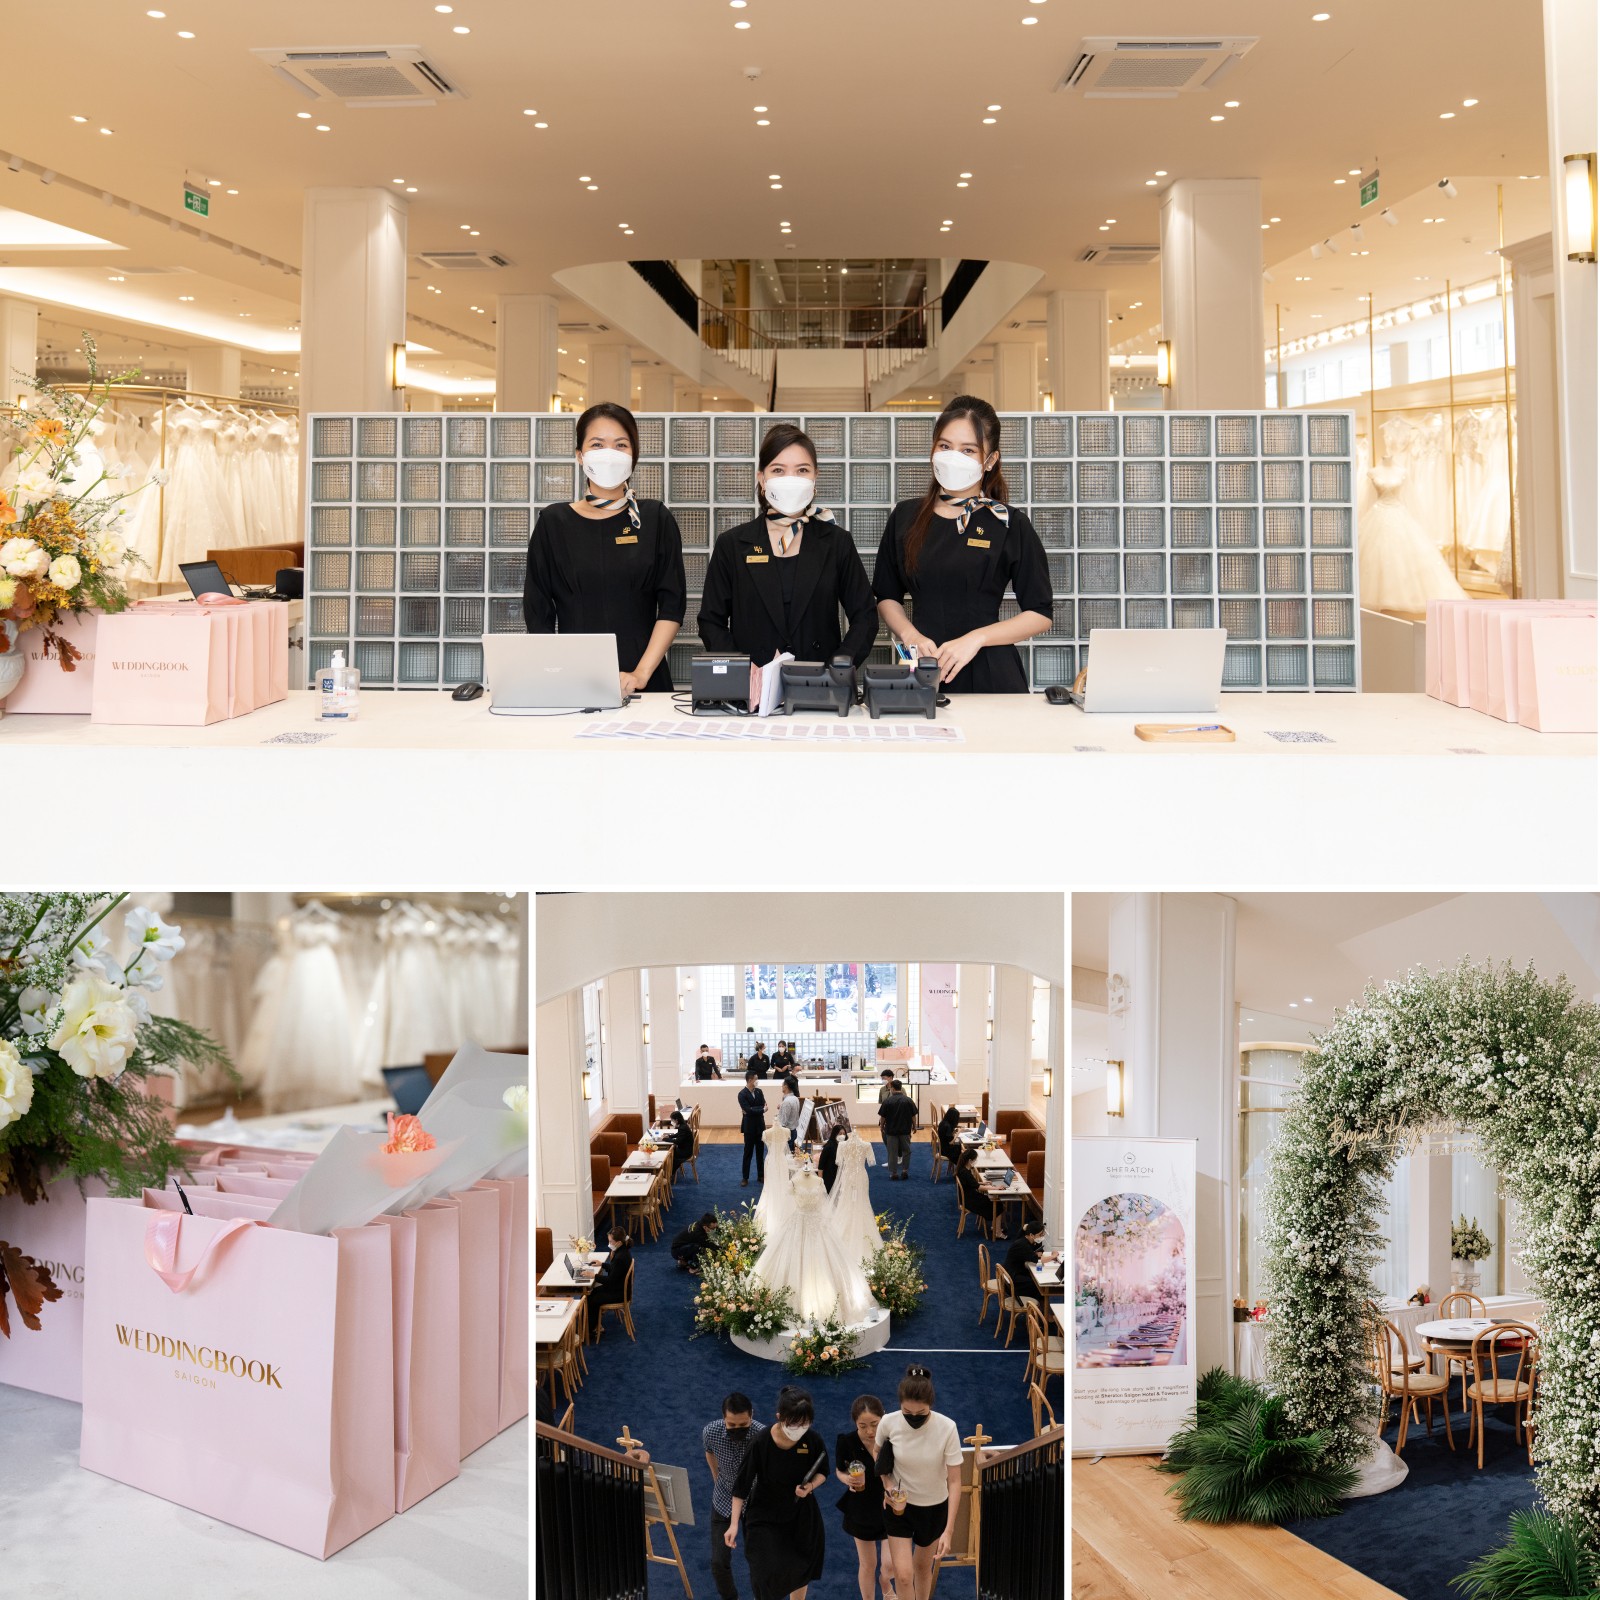 WEDDINGBOOK & Samsung - Wedding exhibition from two Korean brands - Photo 1.